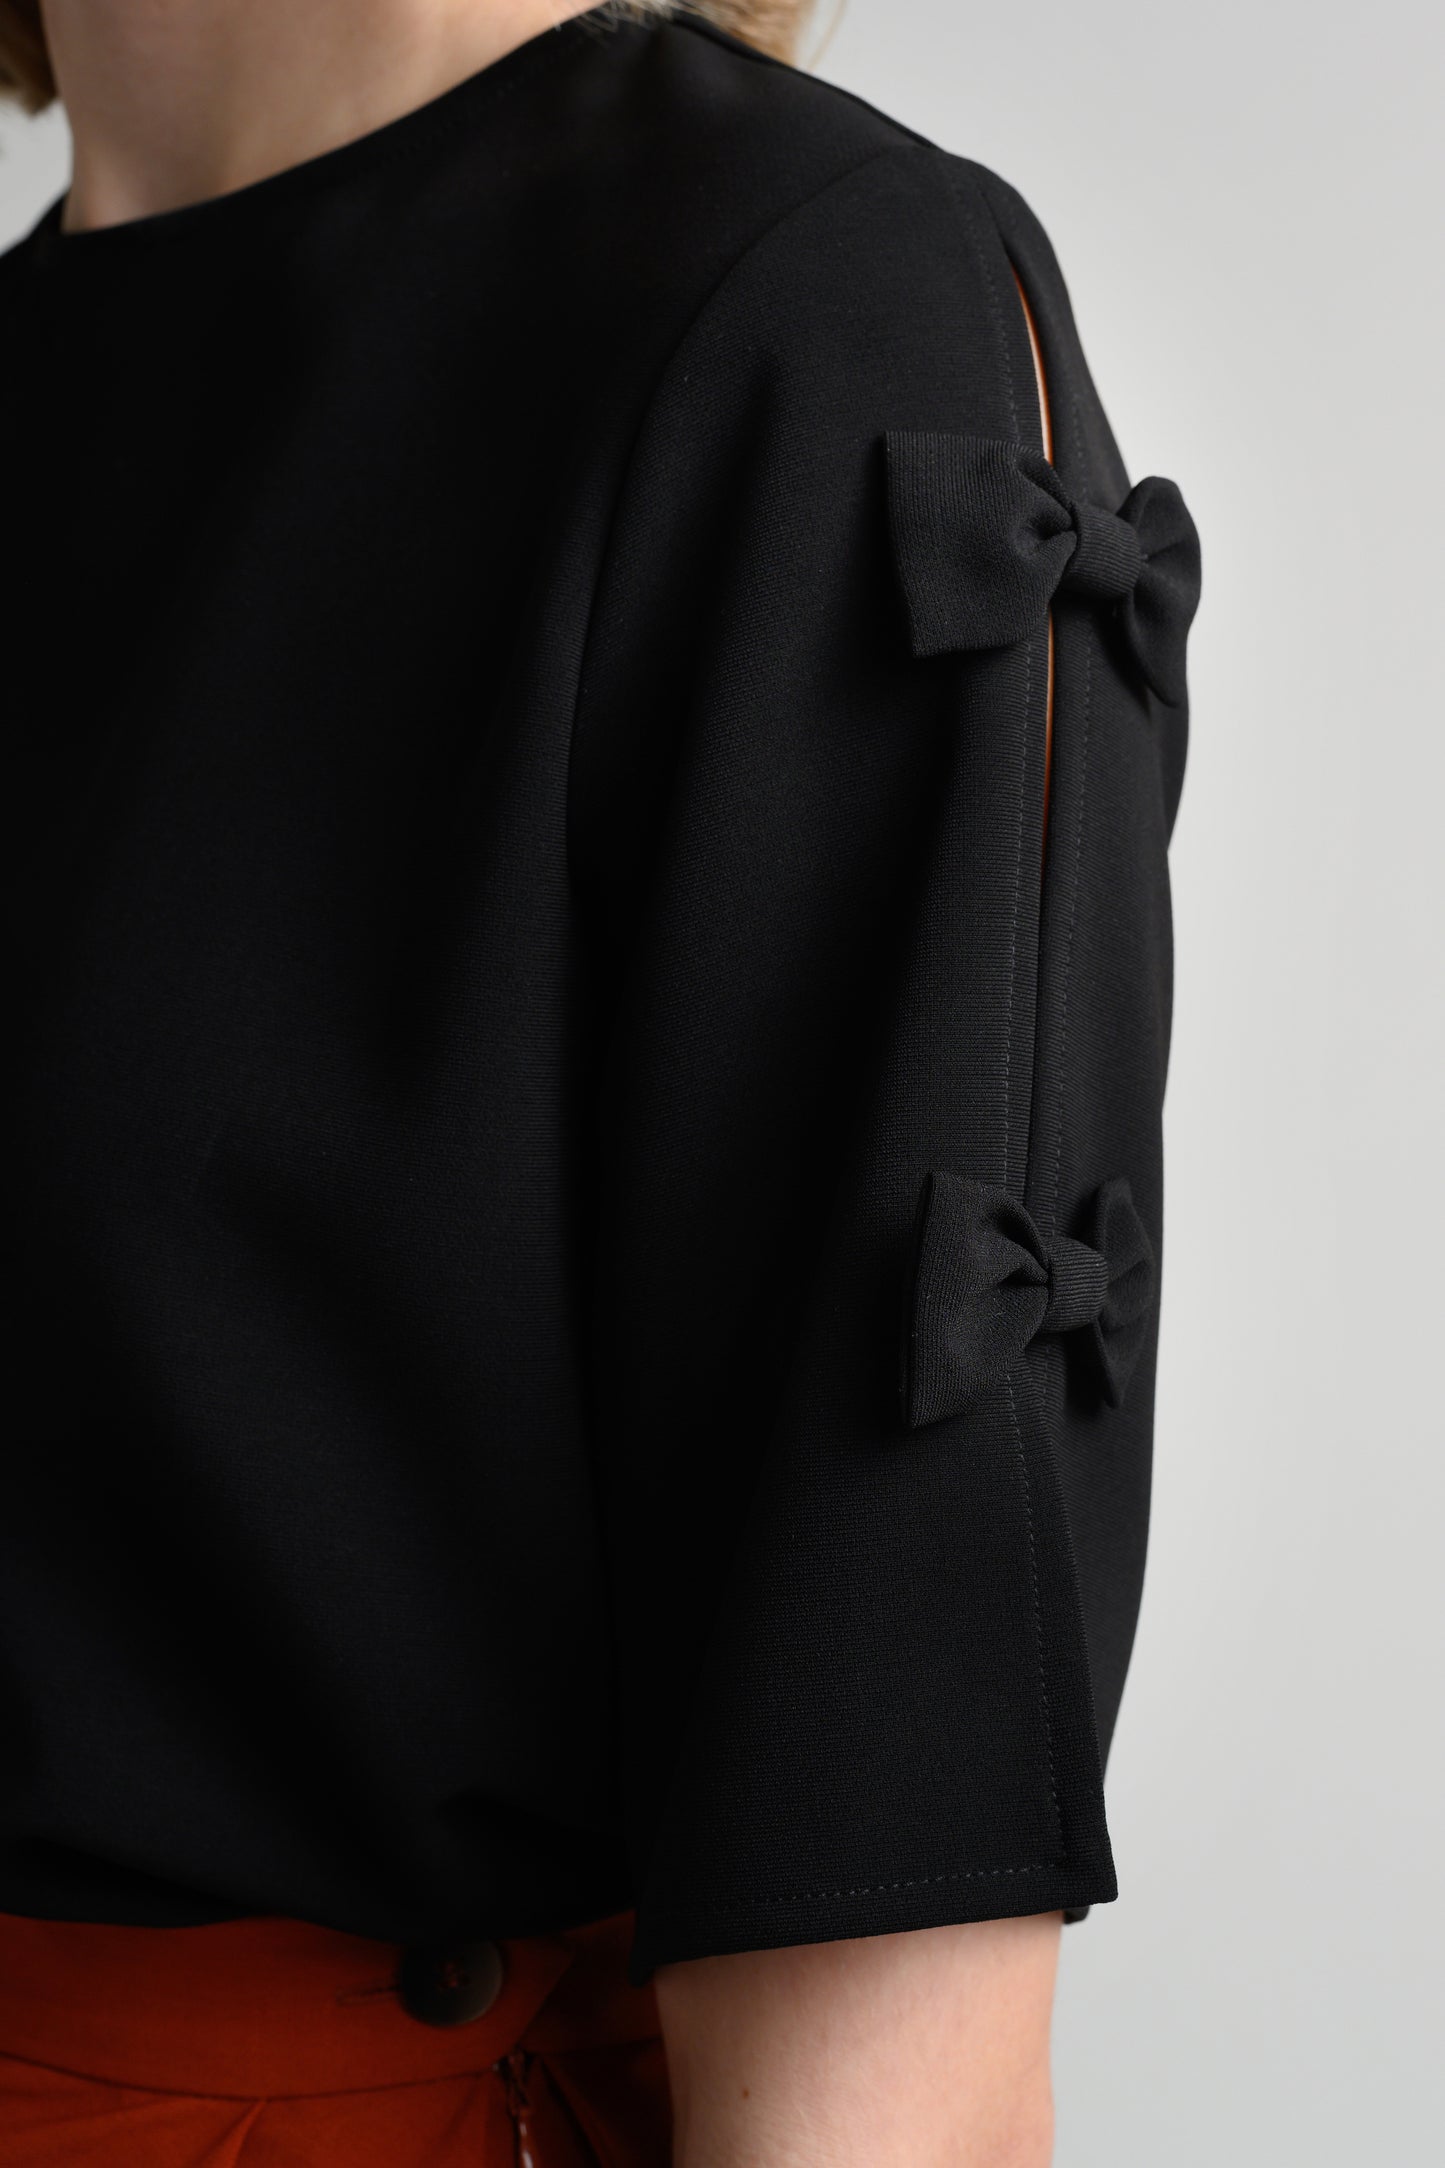 Rosylee Petite Bow Sleeve Blouse - Black 5